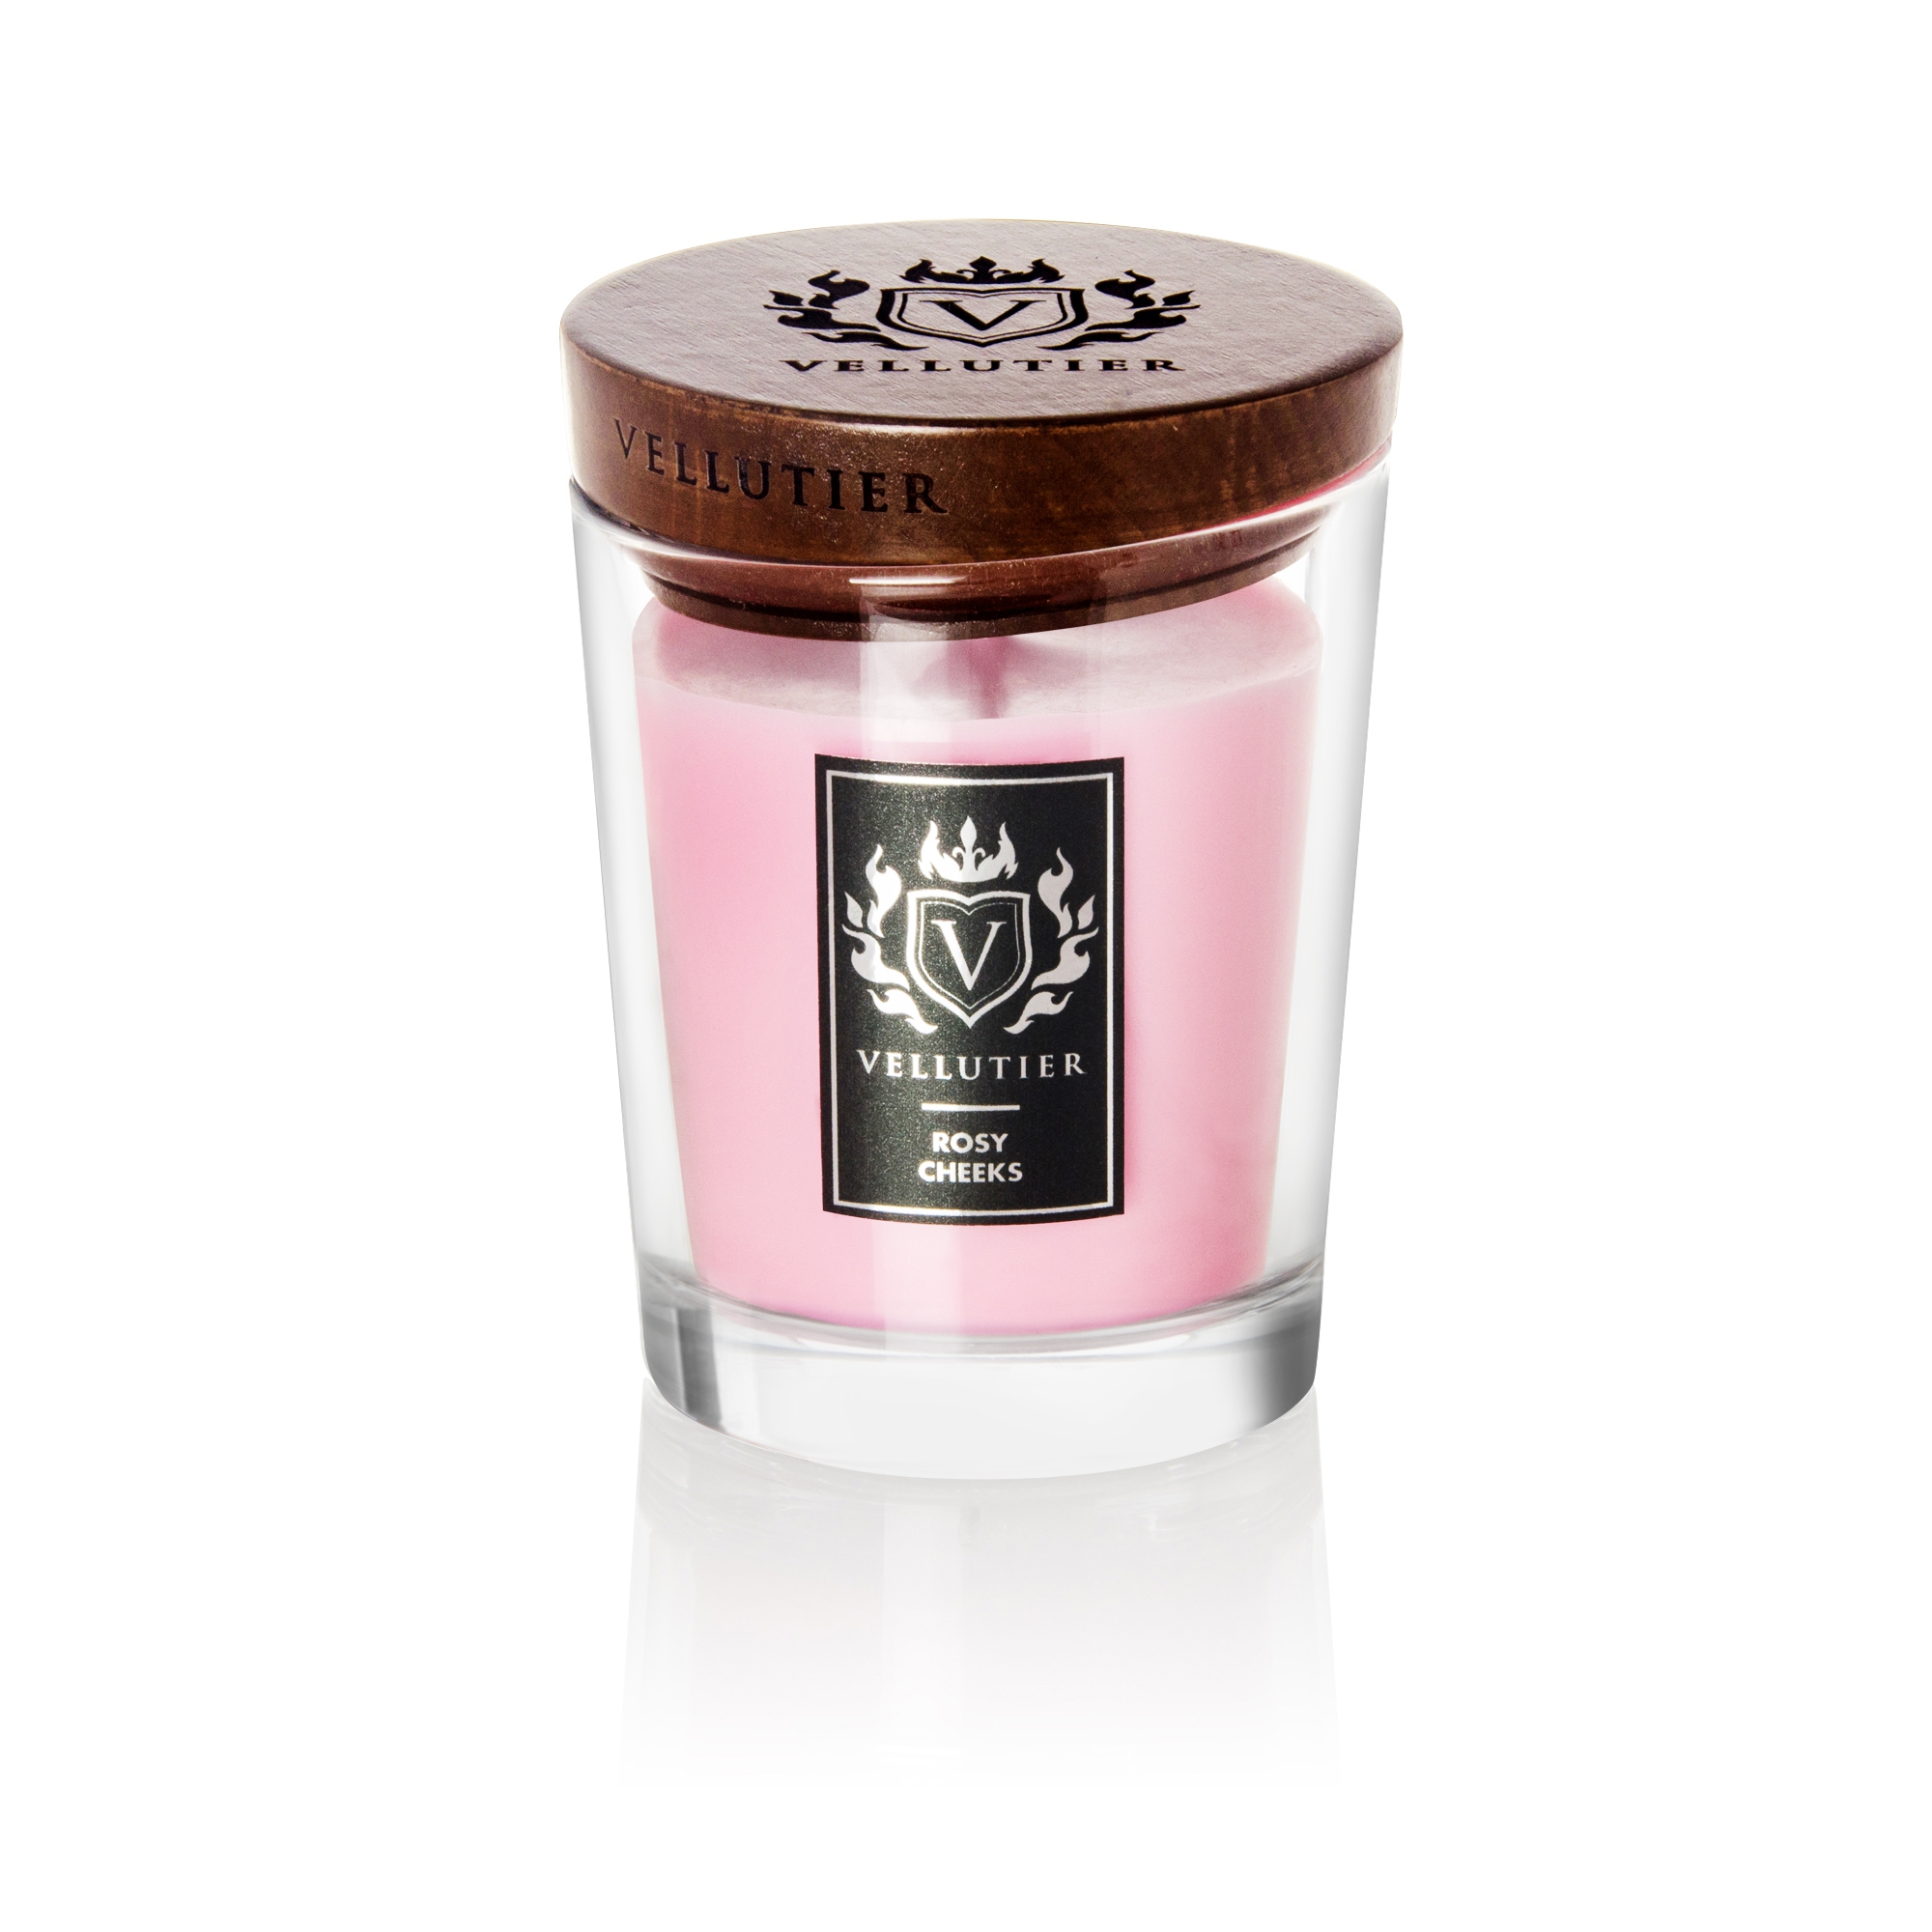 Rosy Cheeks Medium Bougie Parfumée Exclusif 700g